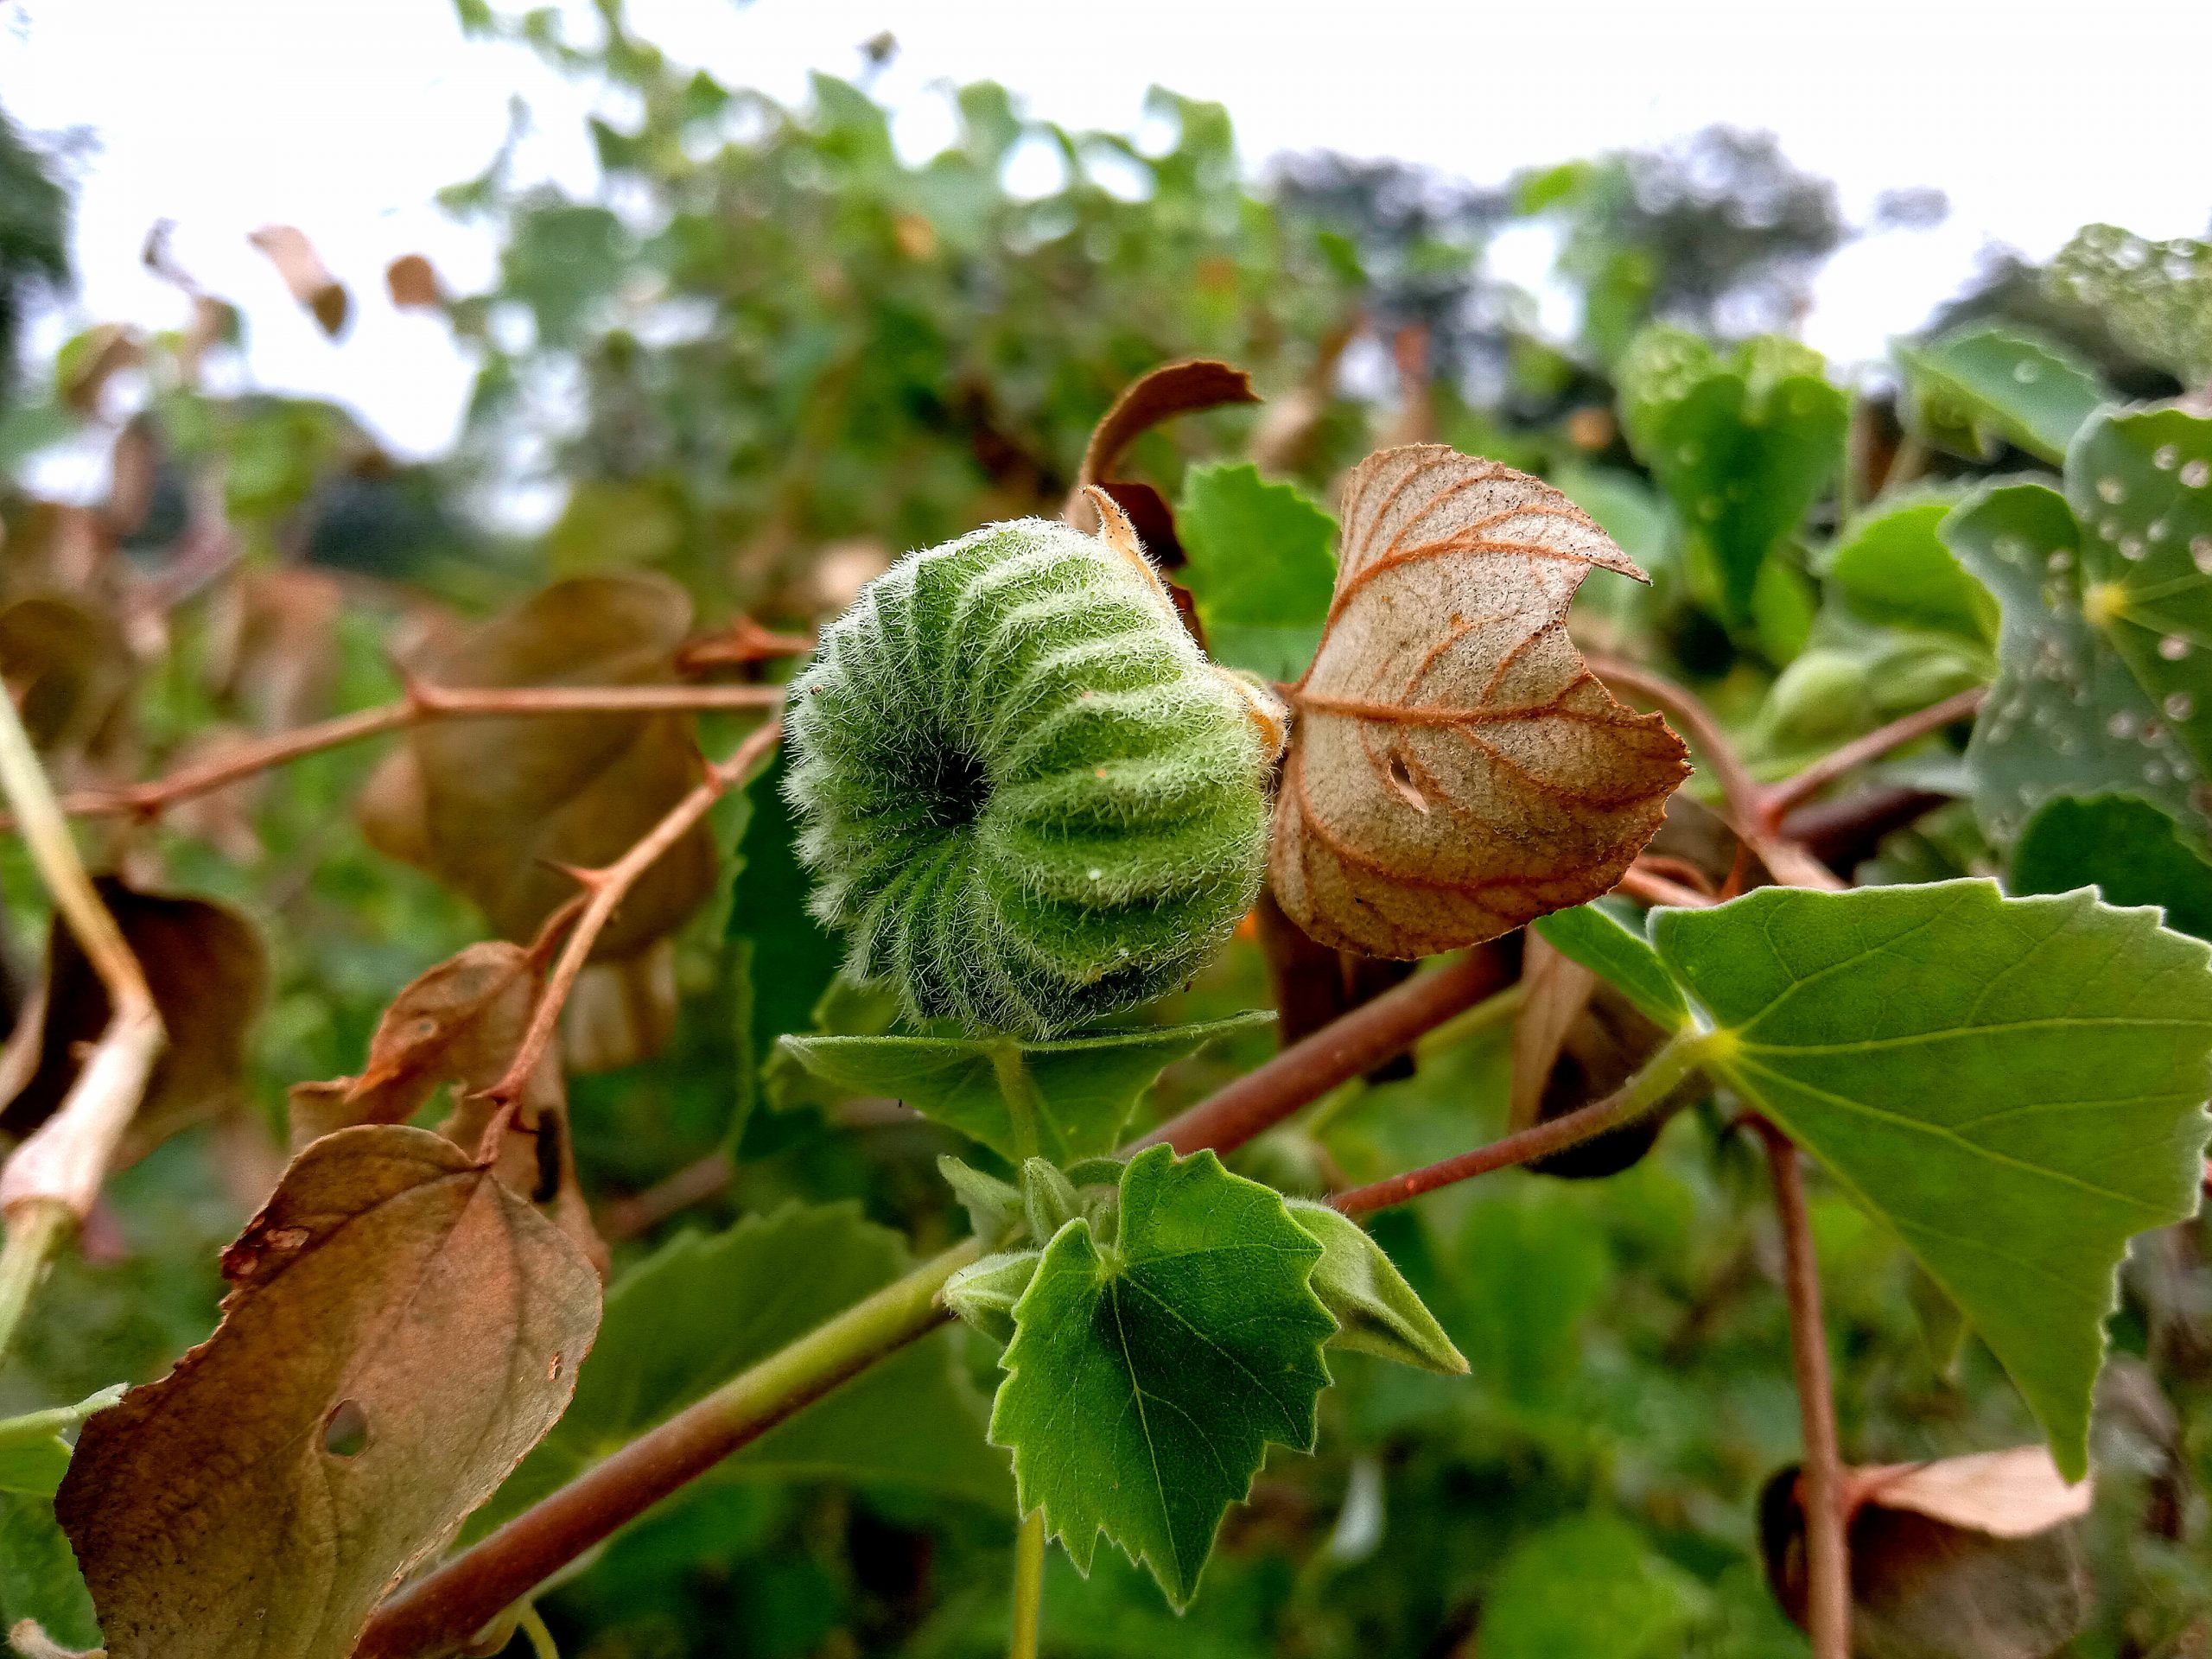 Cotton plant buds